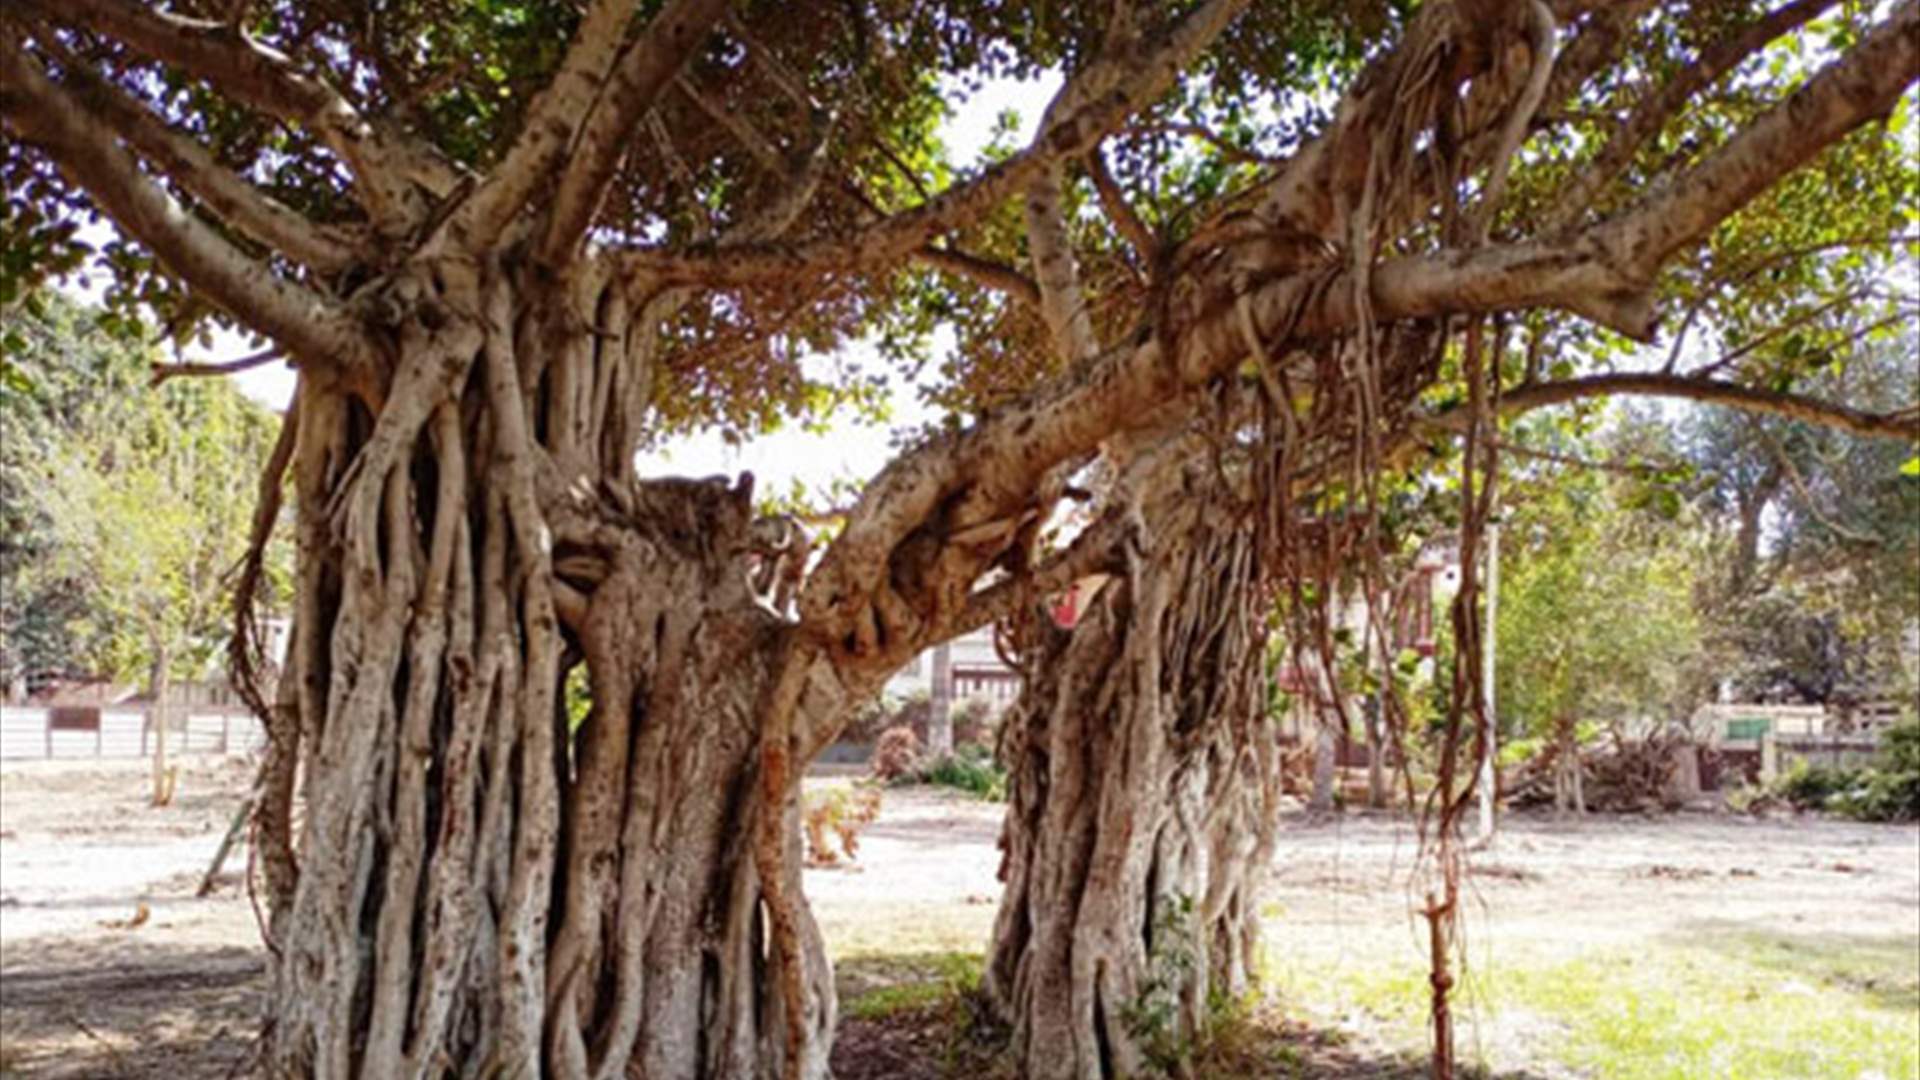 &quot;شجرة التين المقدسة&quot;... معلومات مضللة تستهدف الشجرة ذات الطابع الأكثر قداسة في سريلانكا!